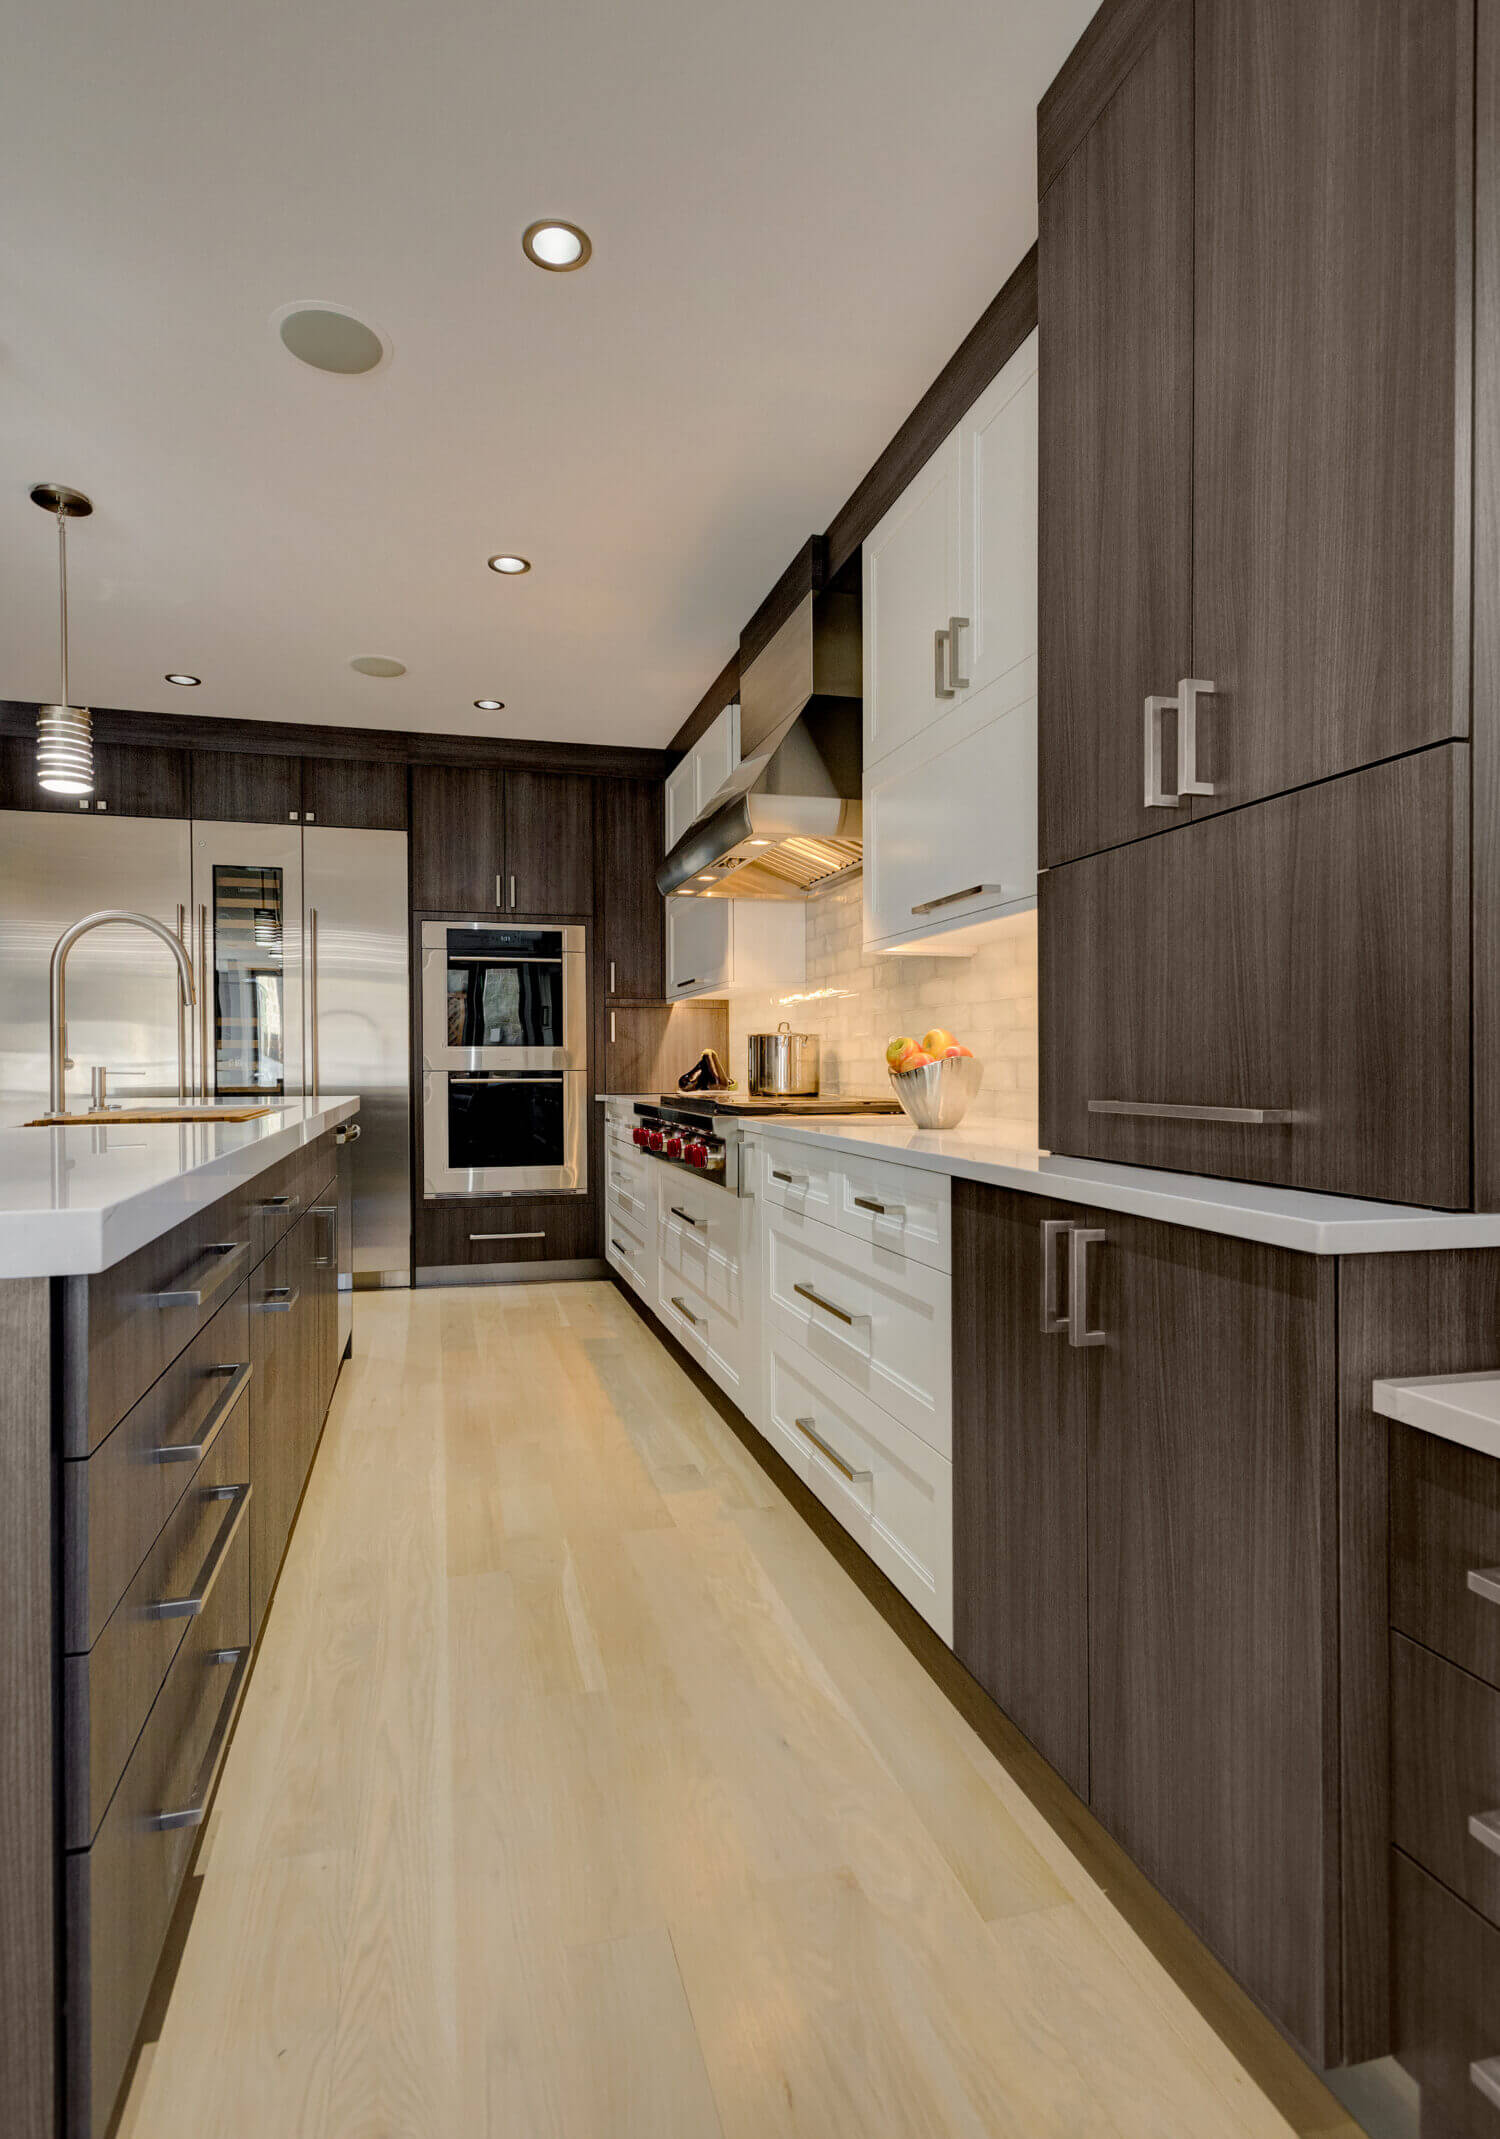 Chicago Kitchen with a Fresh Contemporary Design - Dura Supreme Cabinetry